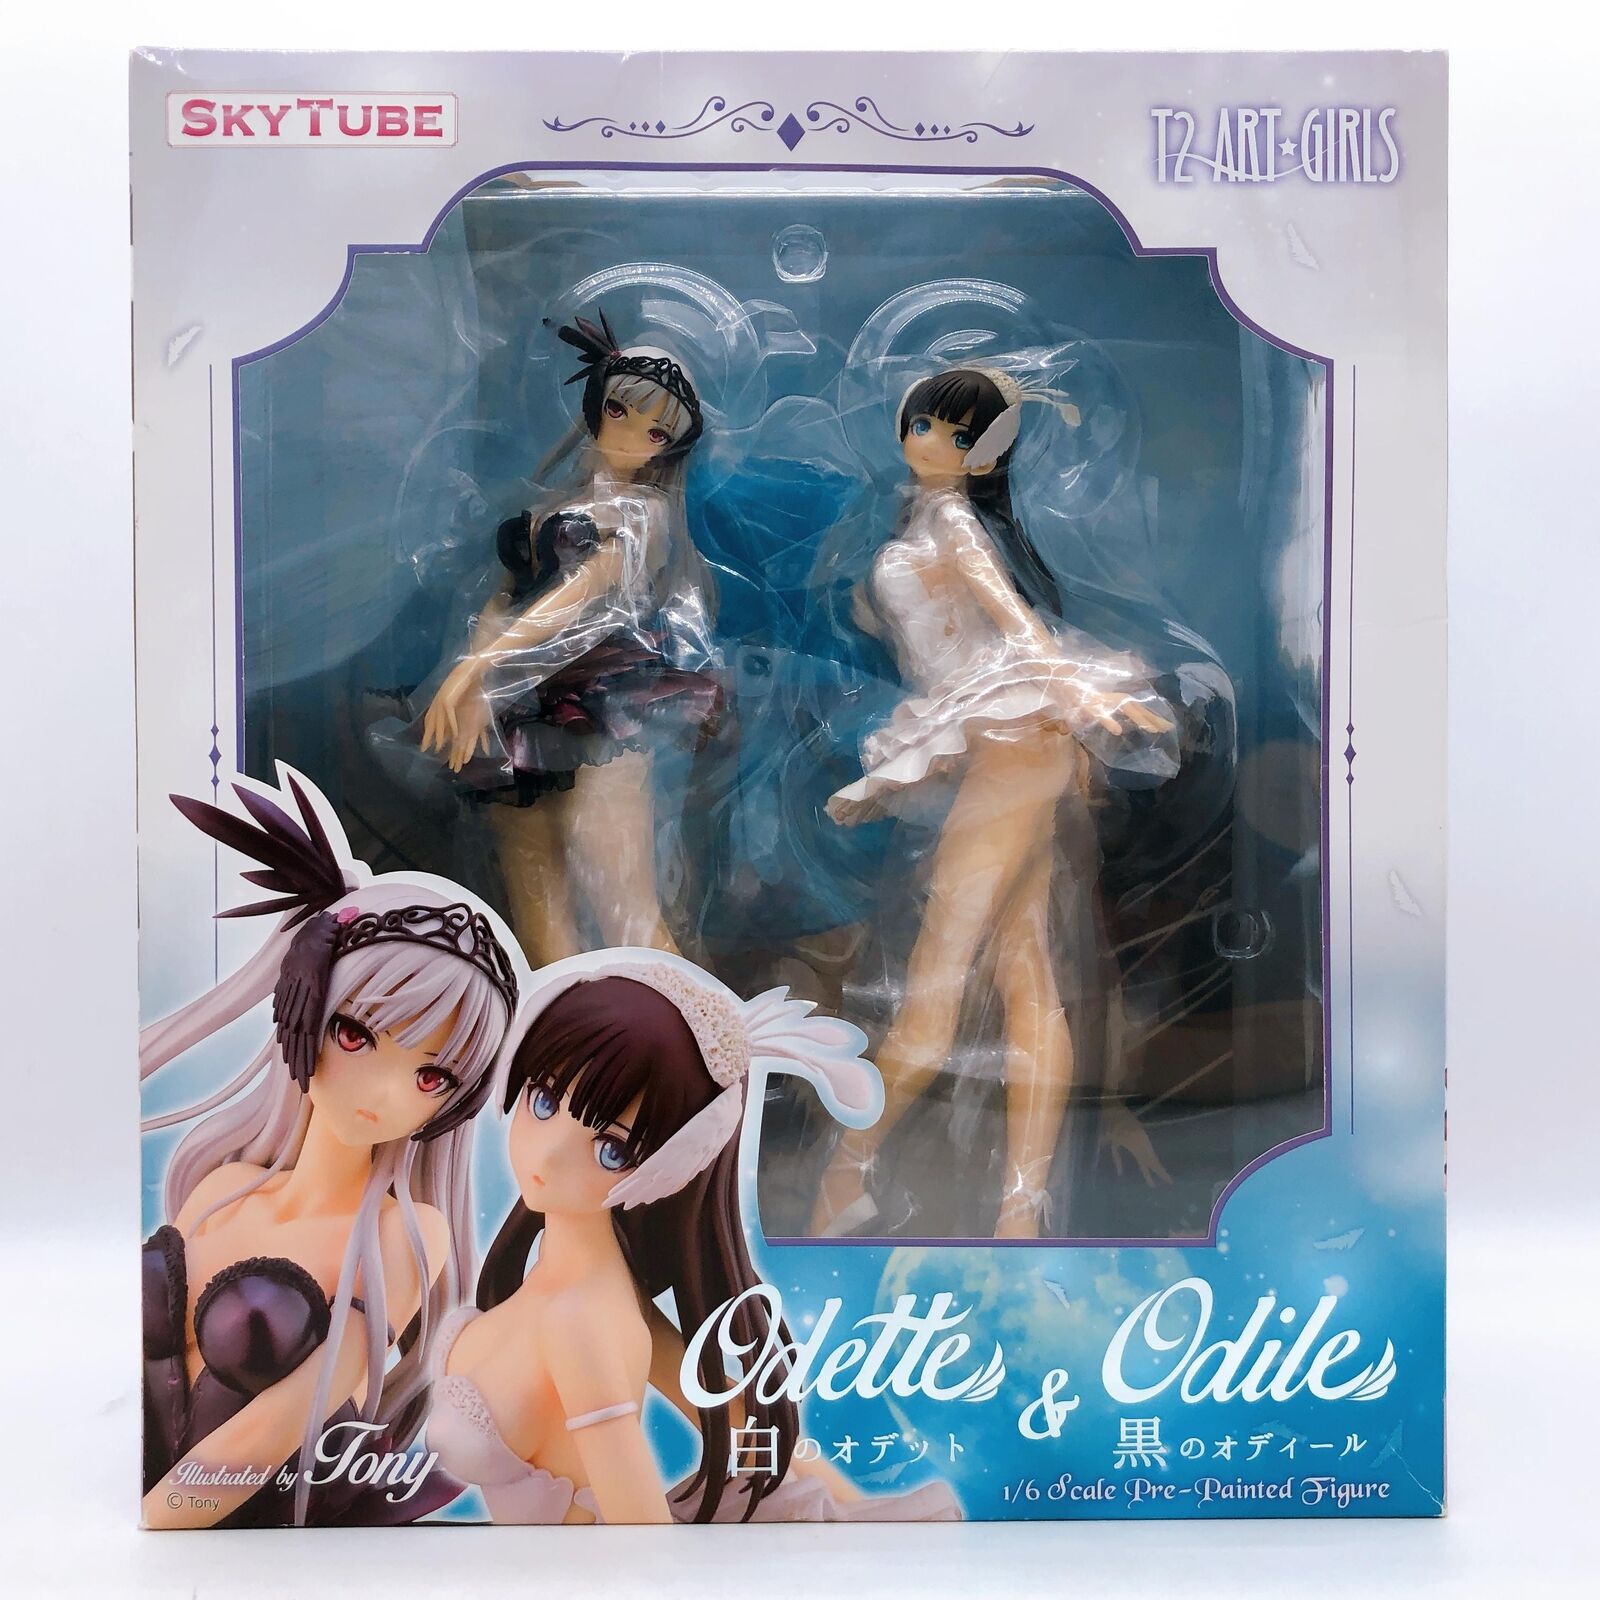 AUTHENTIC SkyTube Odette & Odile 1/6 Figure T2 ART GIRLS Sealed IN STOCK Japan